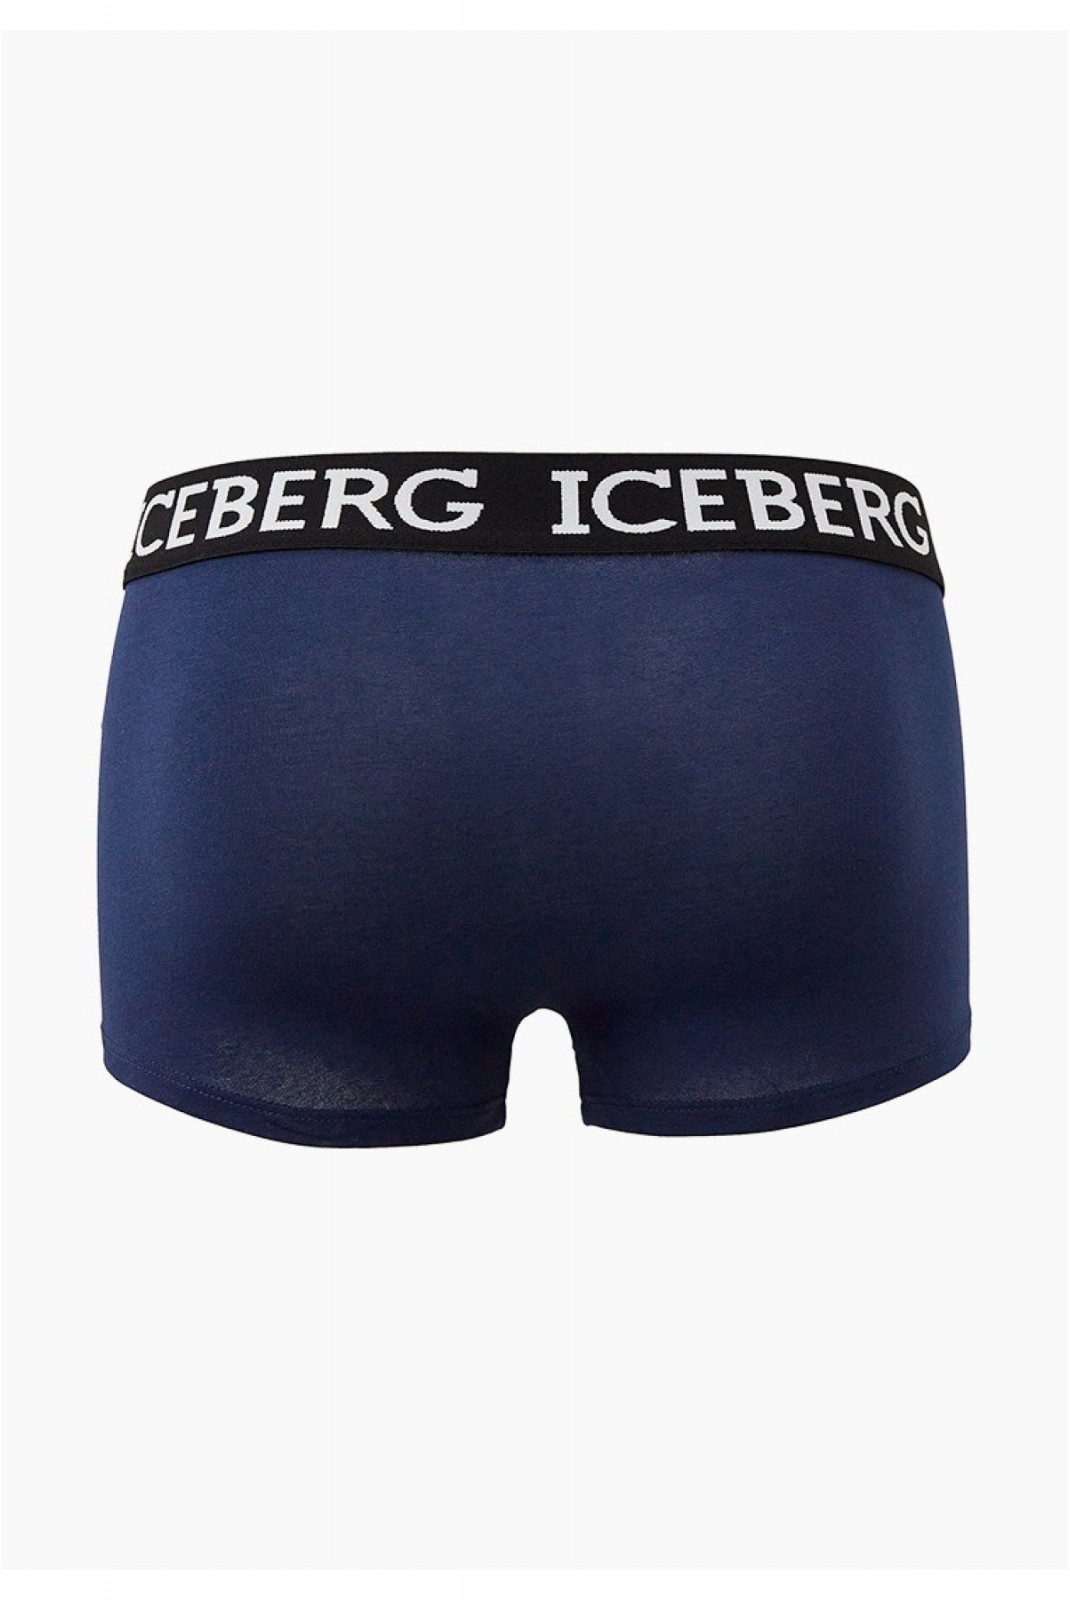 Bipack boxers coton stretch Iceberg NAVY ICE1UTR02